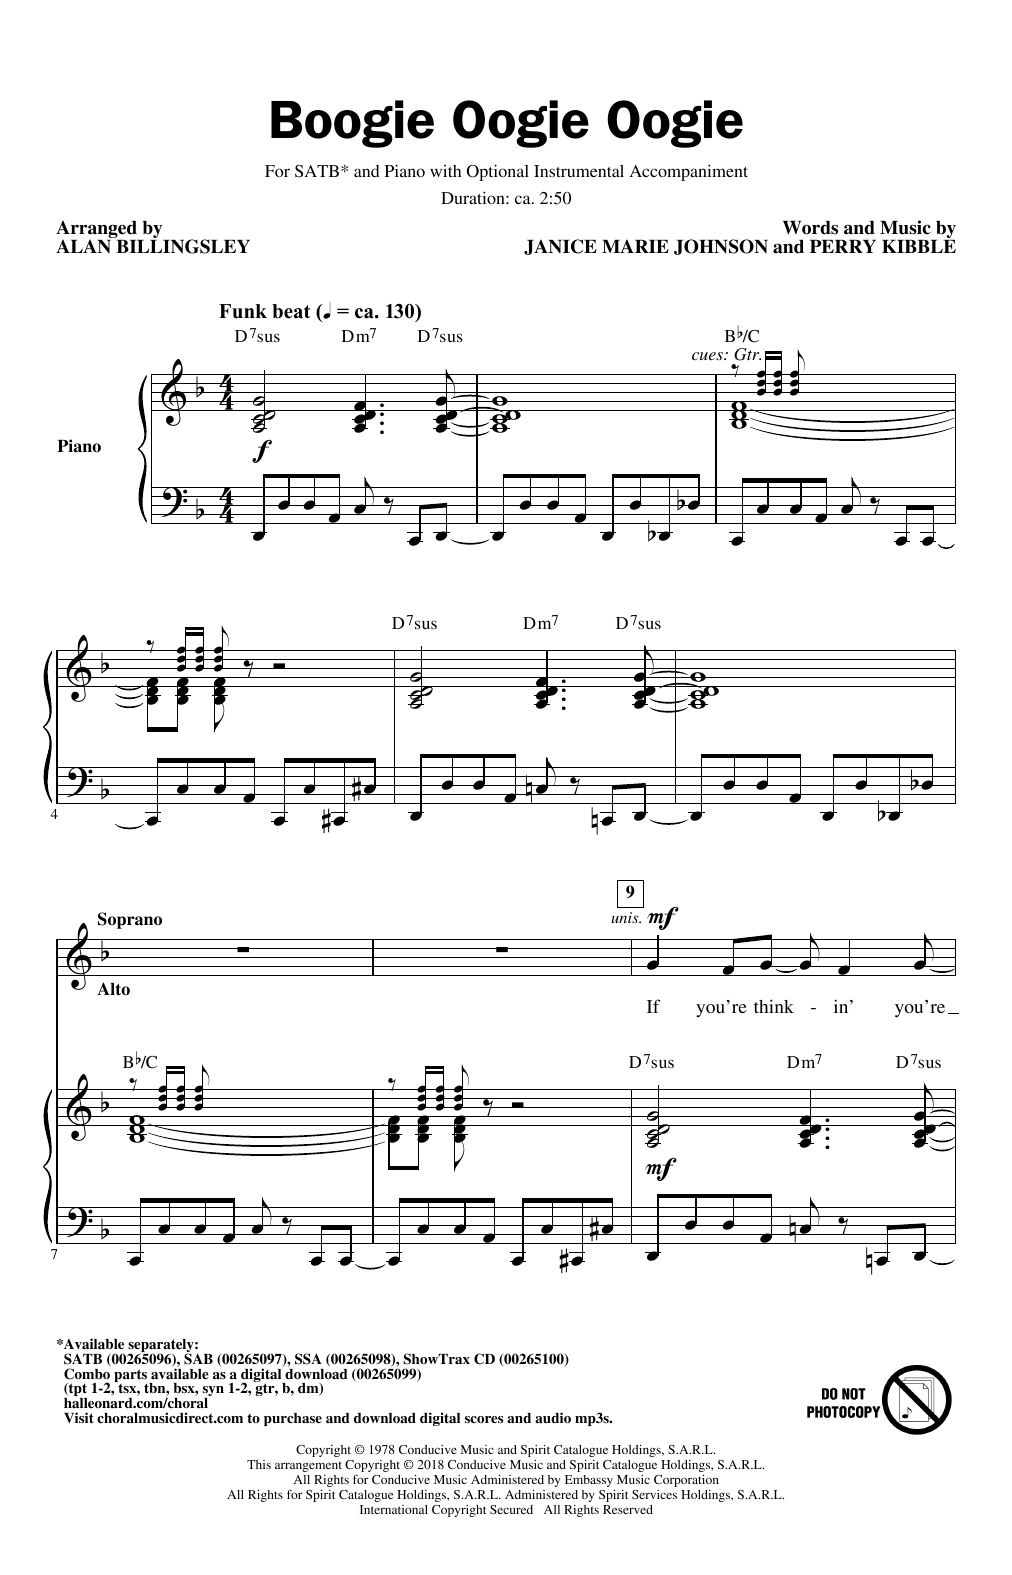 A Taste Of Honey Boogie Oogie Oogie (arr. Alan Billingsley) Sheet Music Notes & Chords for SAB - Download or Print PDF